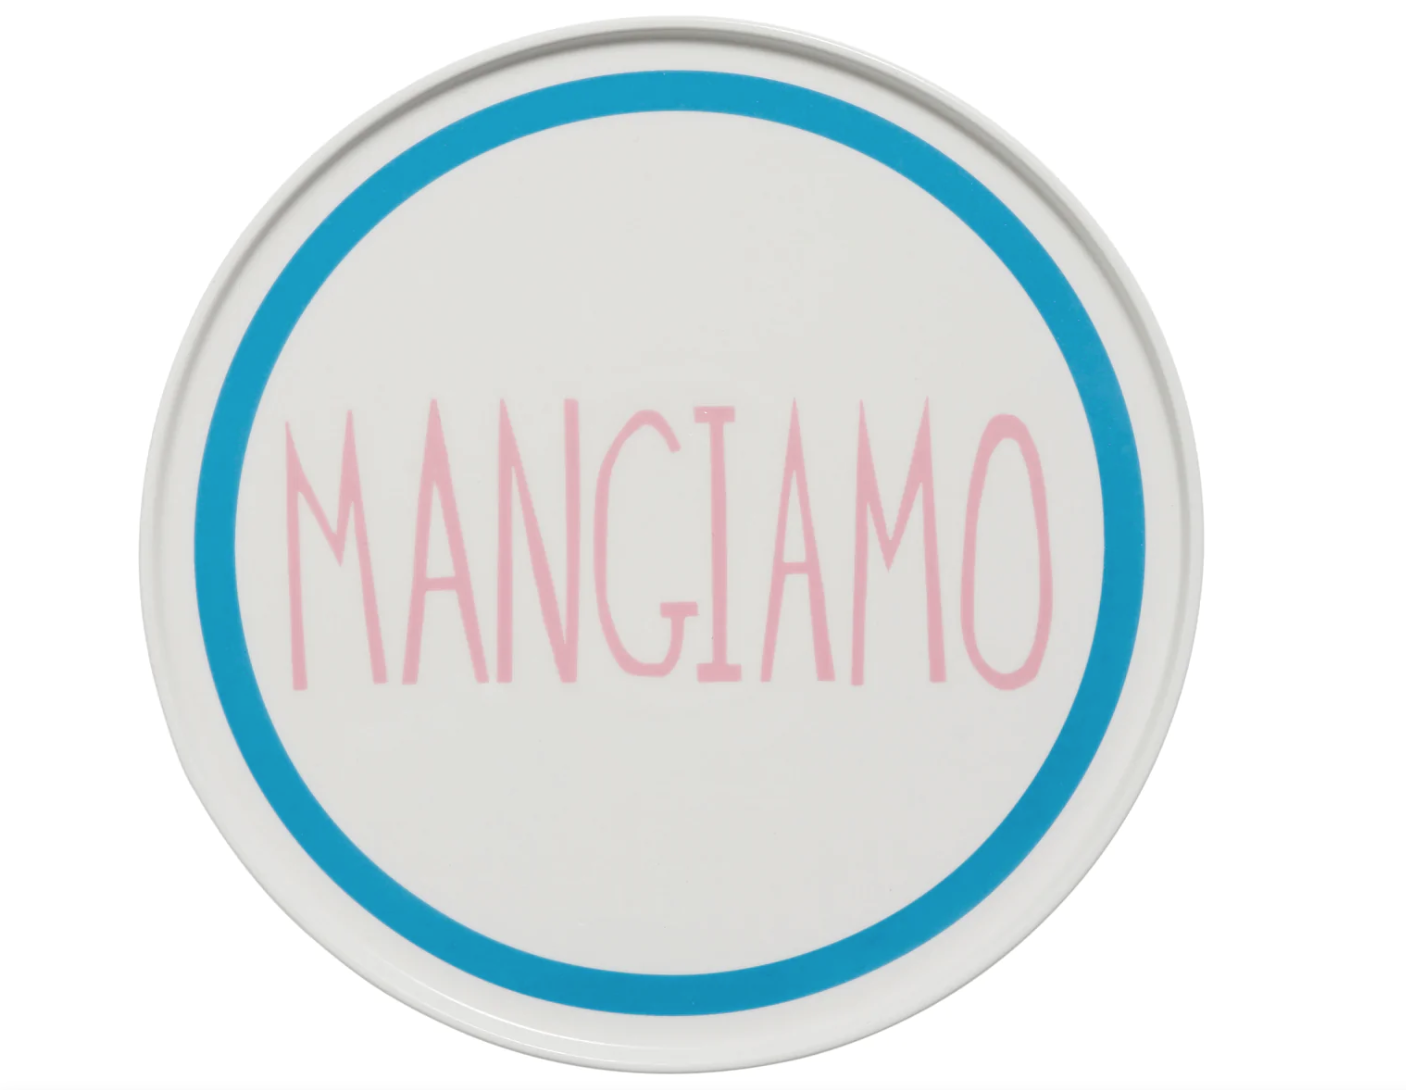 MANGIAMO PLATE